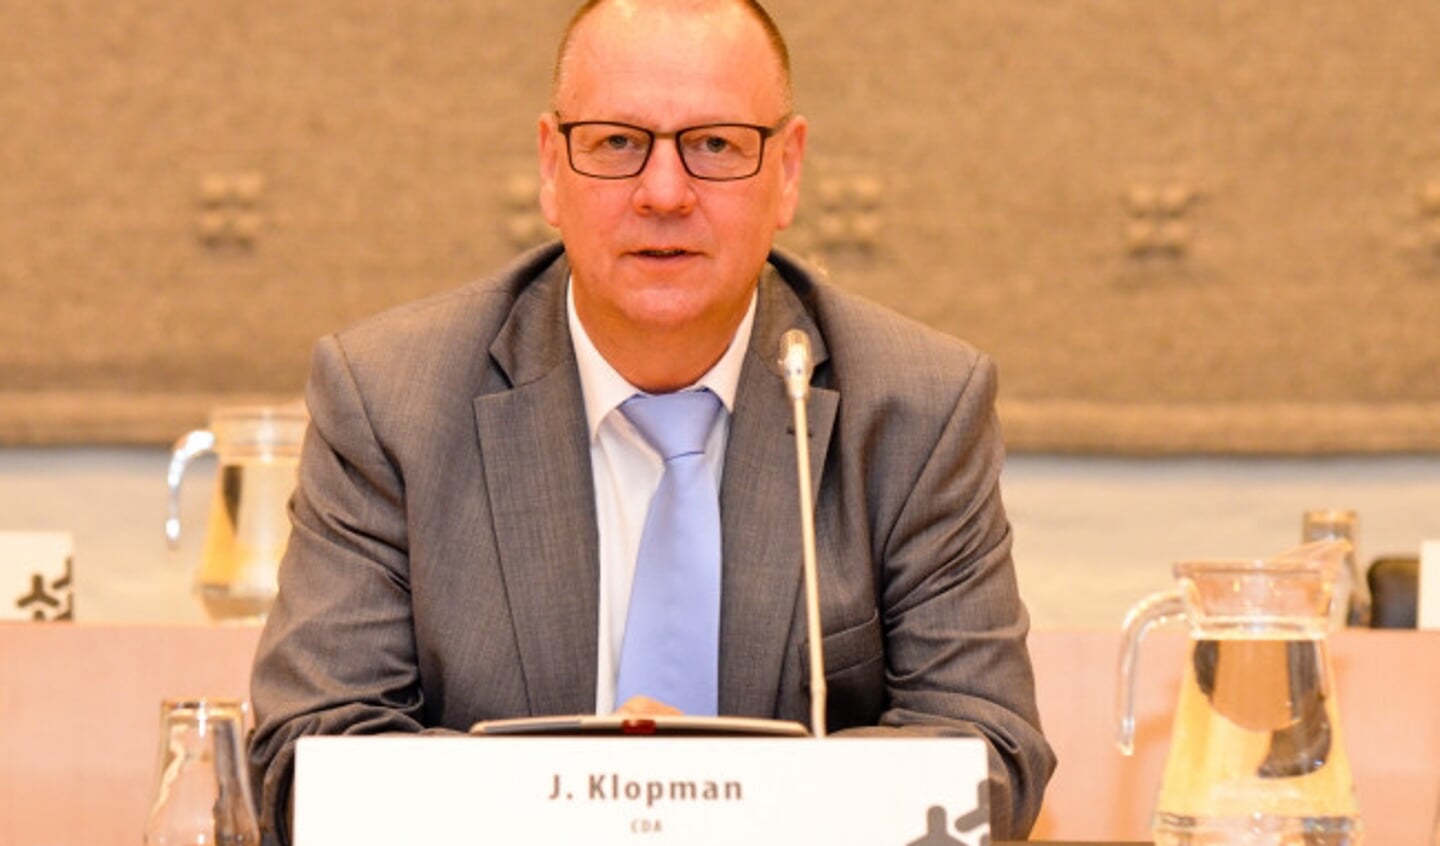  Jan Klopman